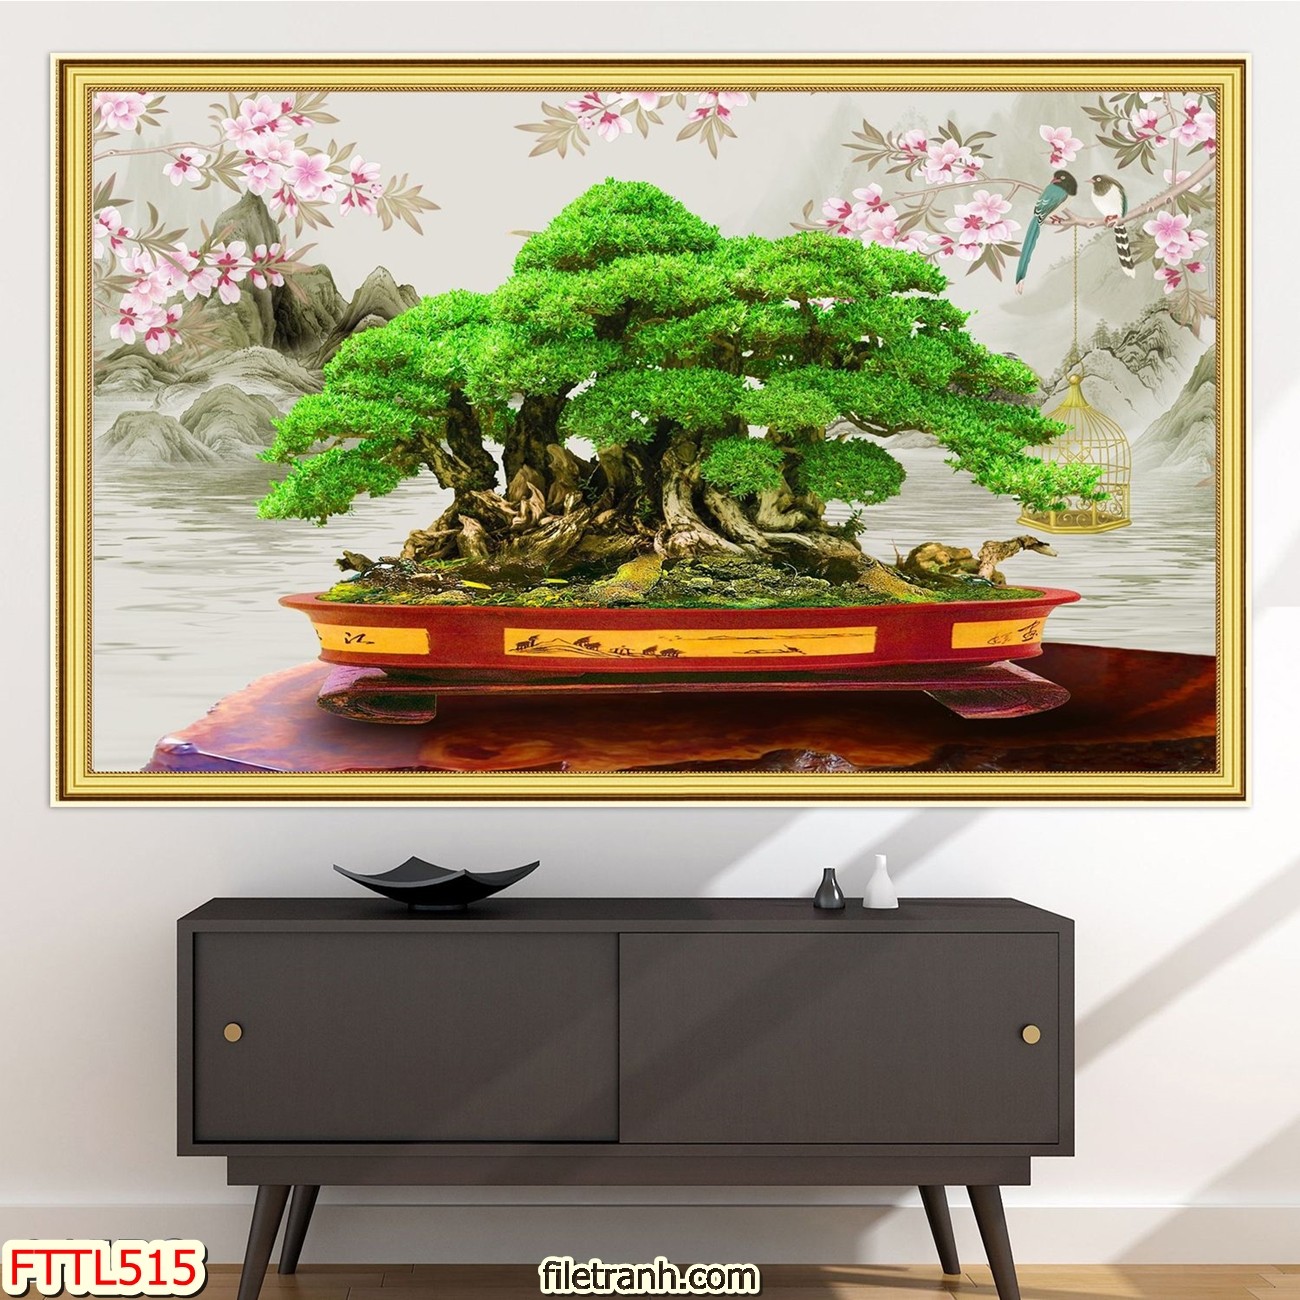 https://filetranh.com/file-tranh-chau-mai-bonsai/file-tranh-chau-mai-bonsai-fttl515.html